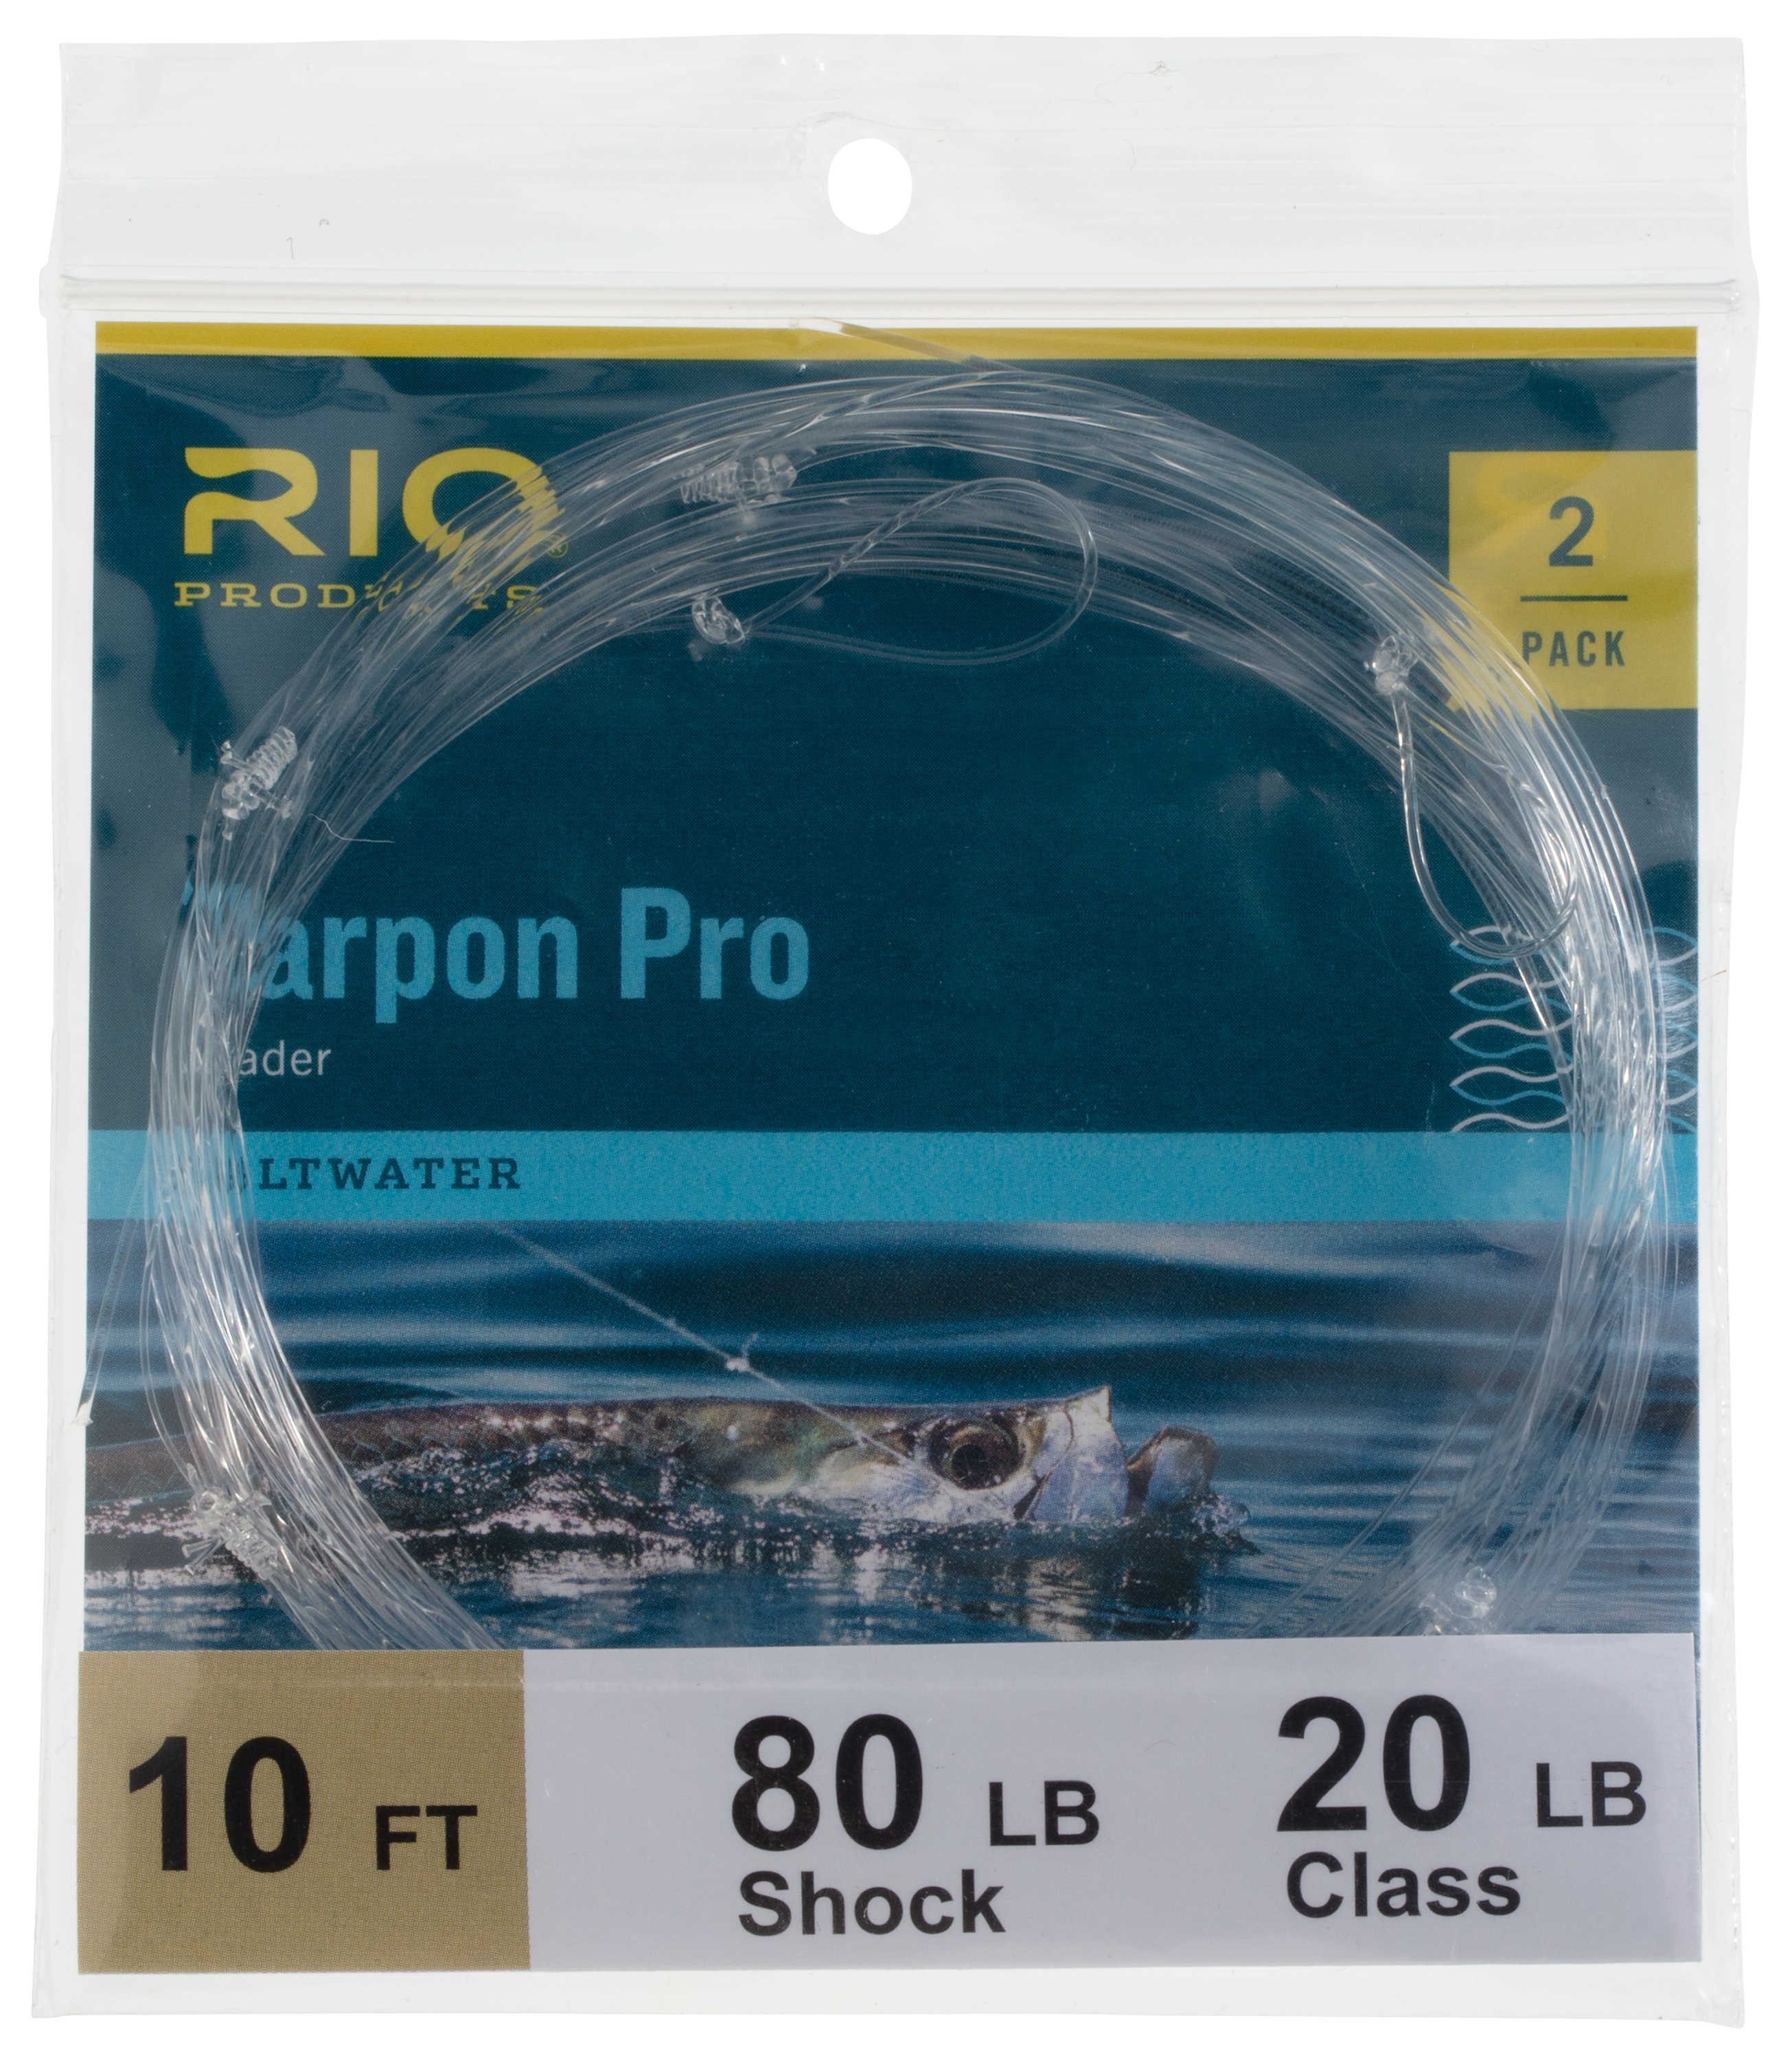 RIO Tarpon Pro Fly Leader